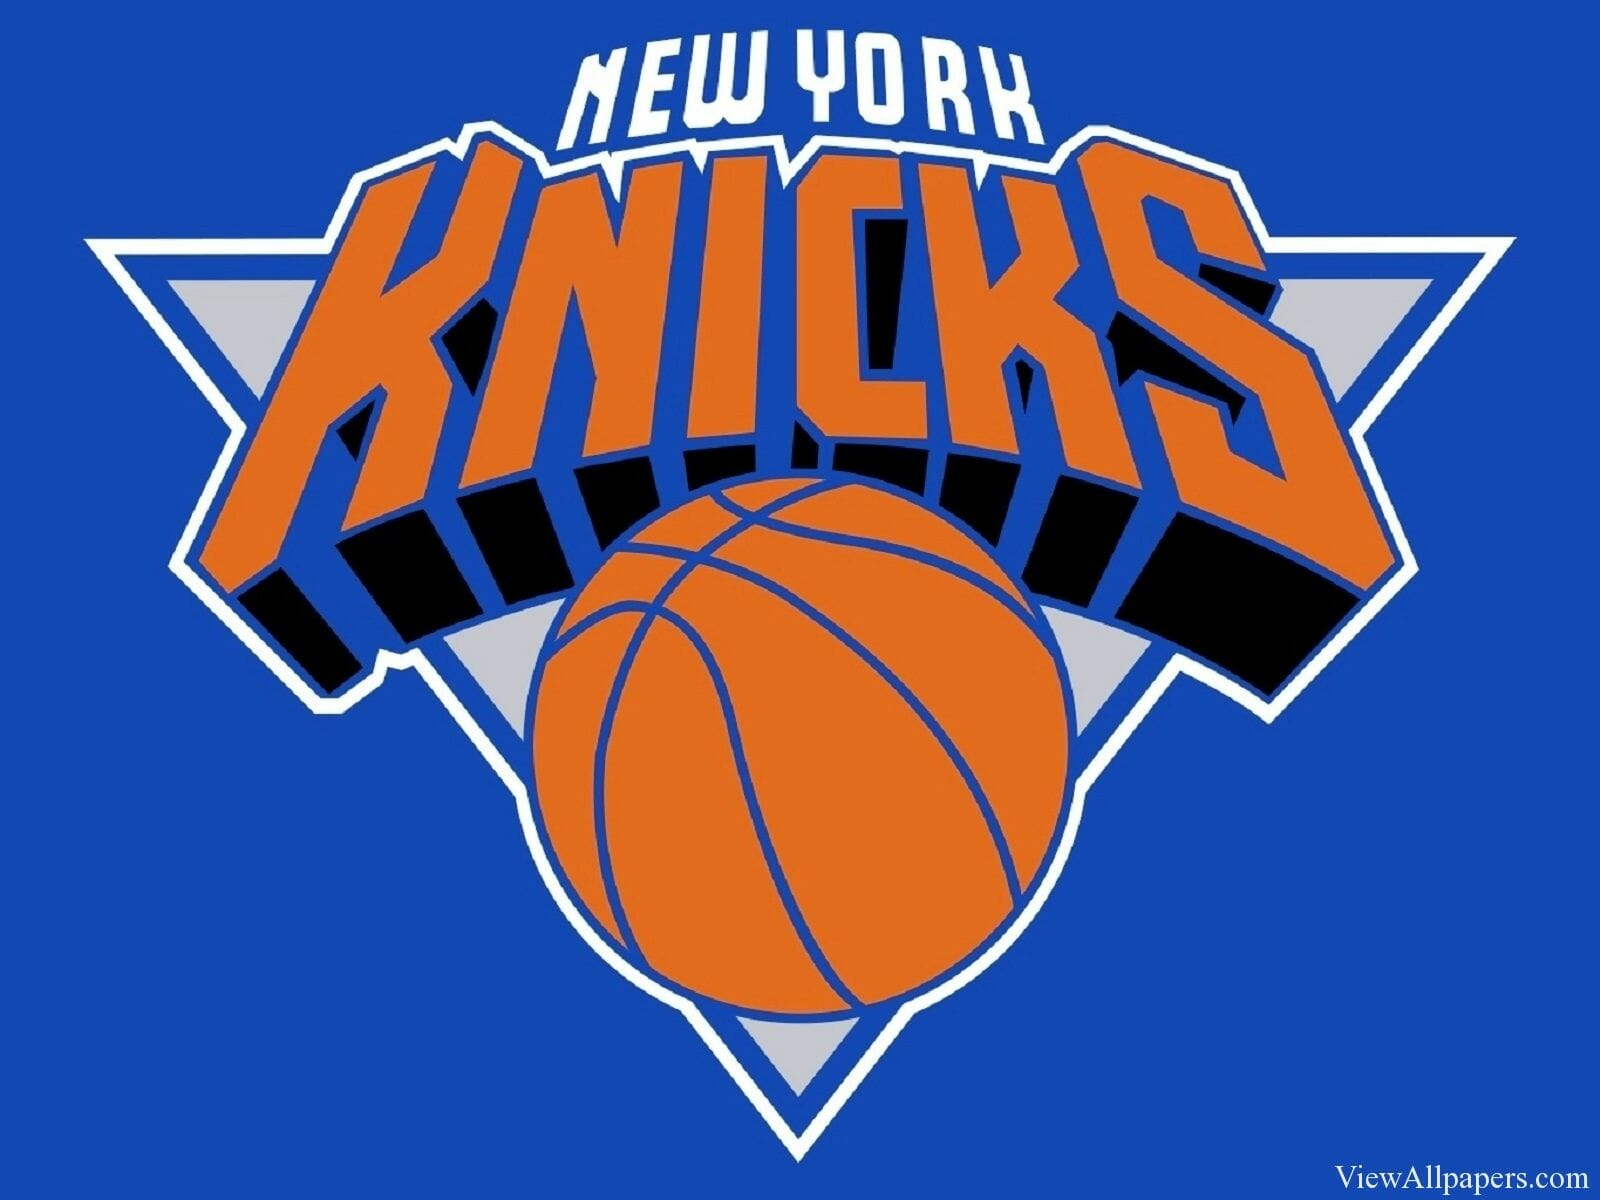 New York Knicks | Organizational Profile, Work & Jobs